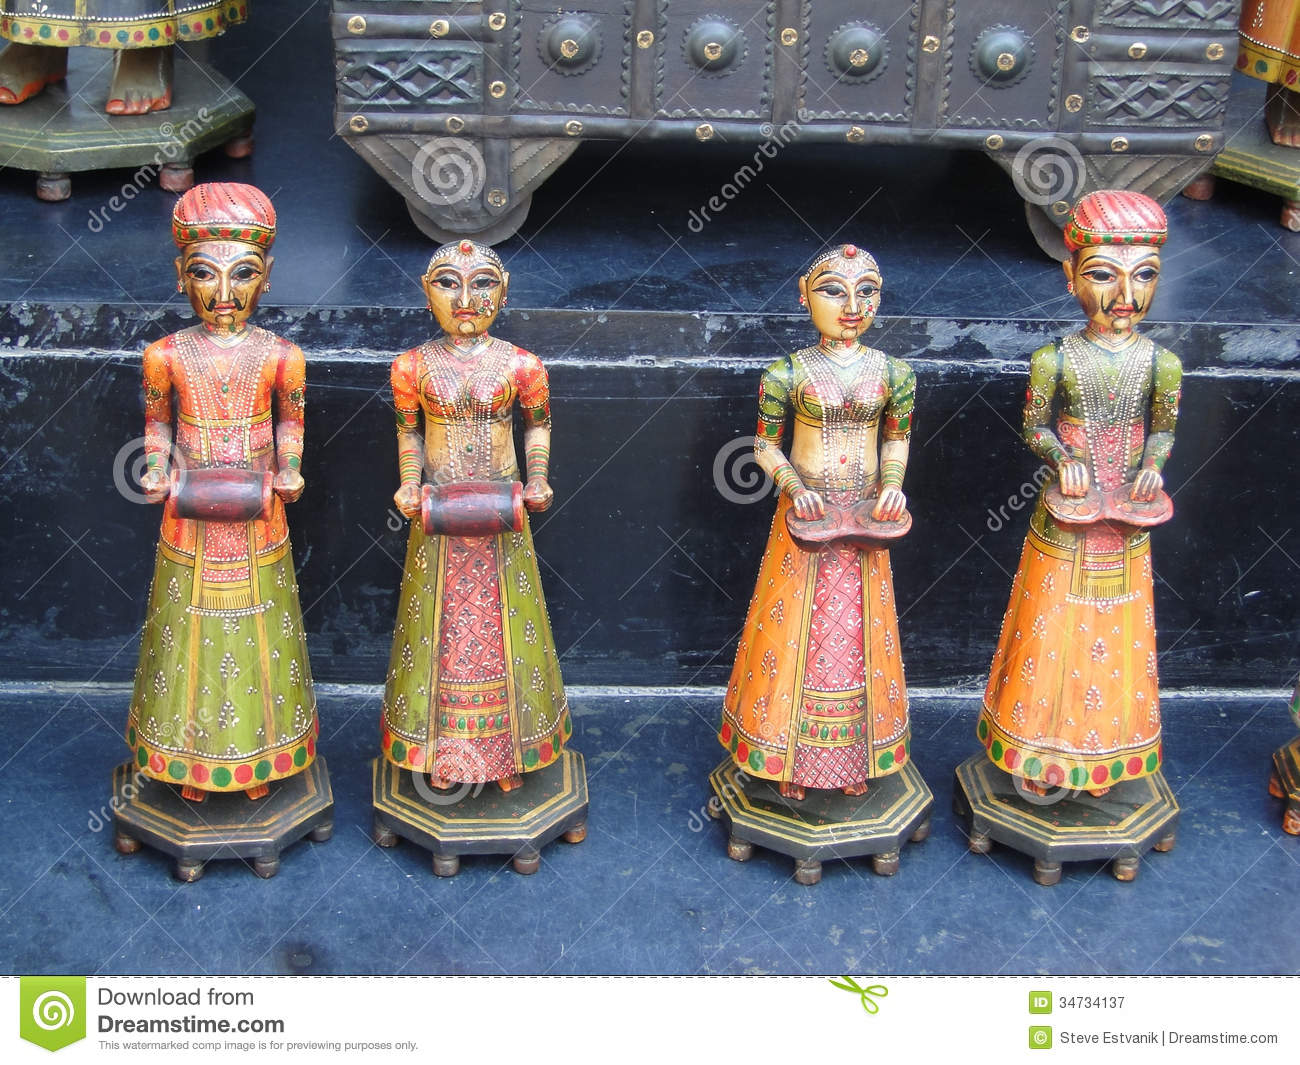 fondos de pantalla de rajput para teléfonos móviles,estatua,figurilla,juegos,templo hindú,templo